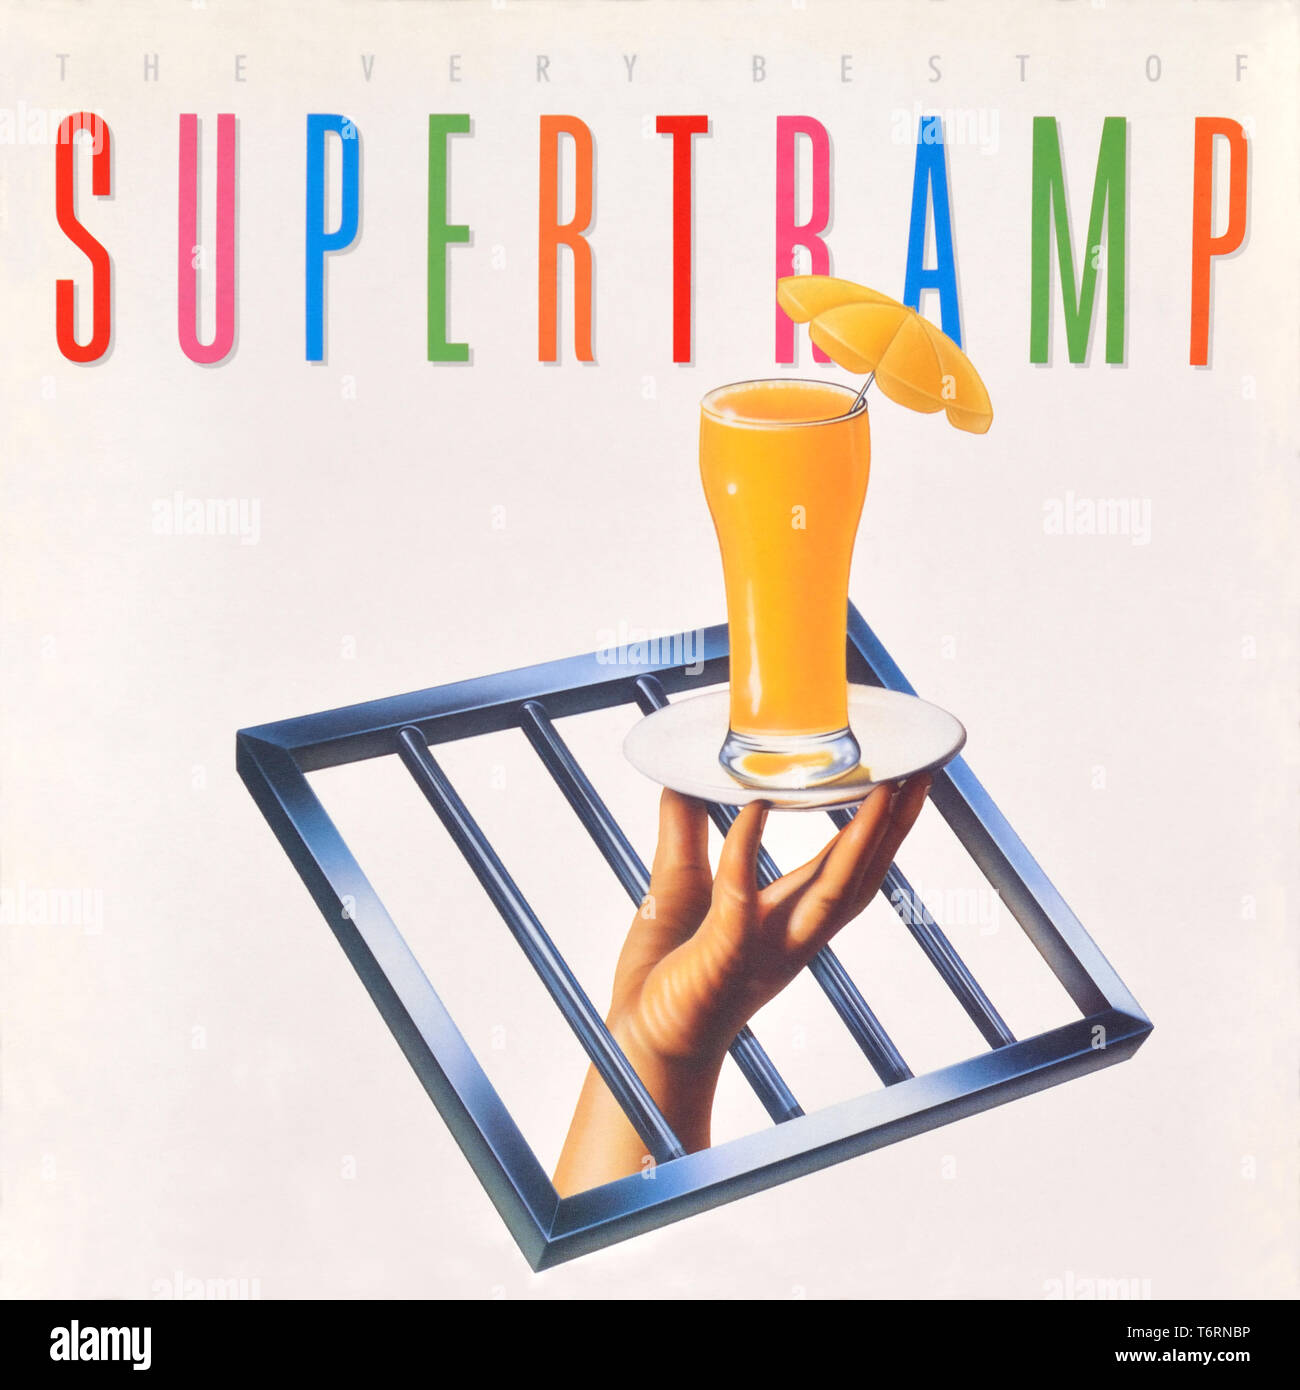 Supertramp - original Vinyl Album Cover - The Very Best of Supertramp - 1990 Stockfoto